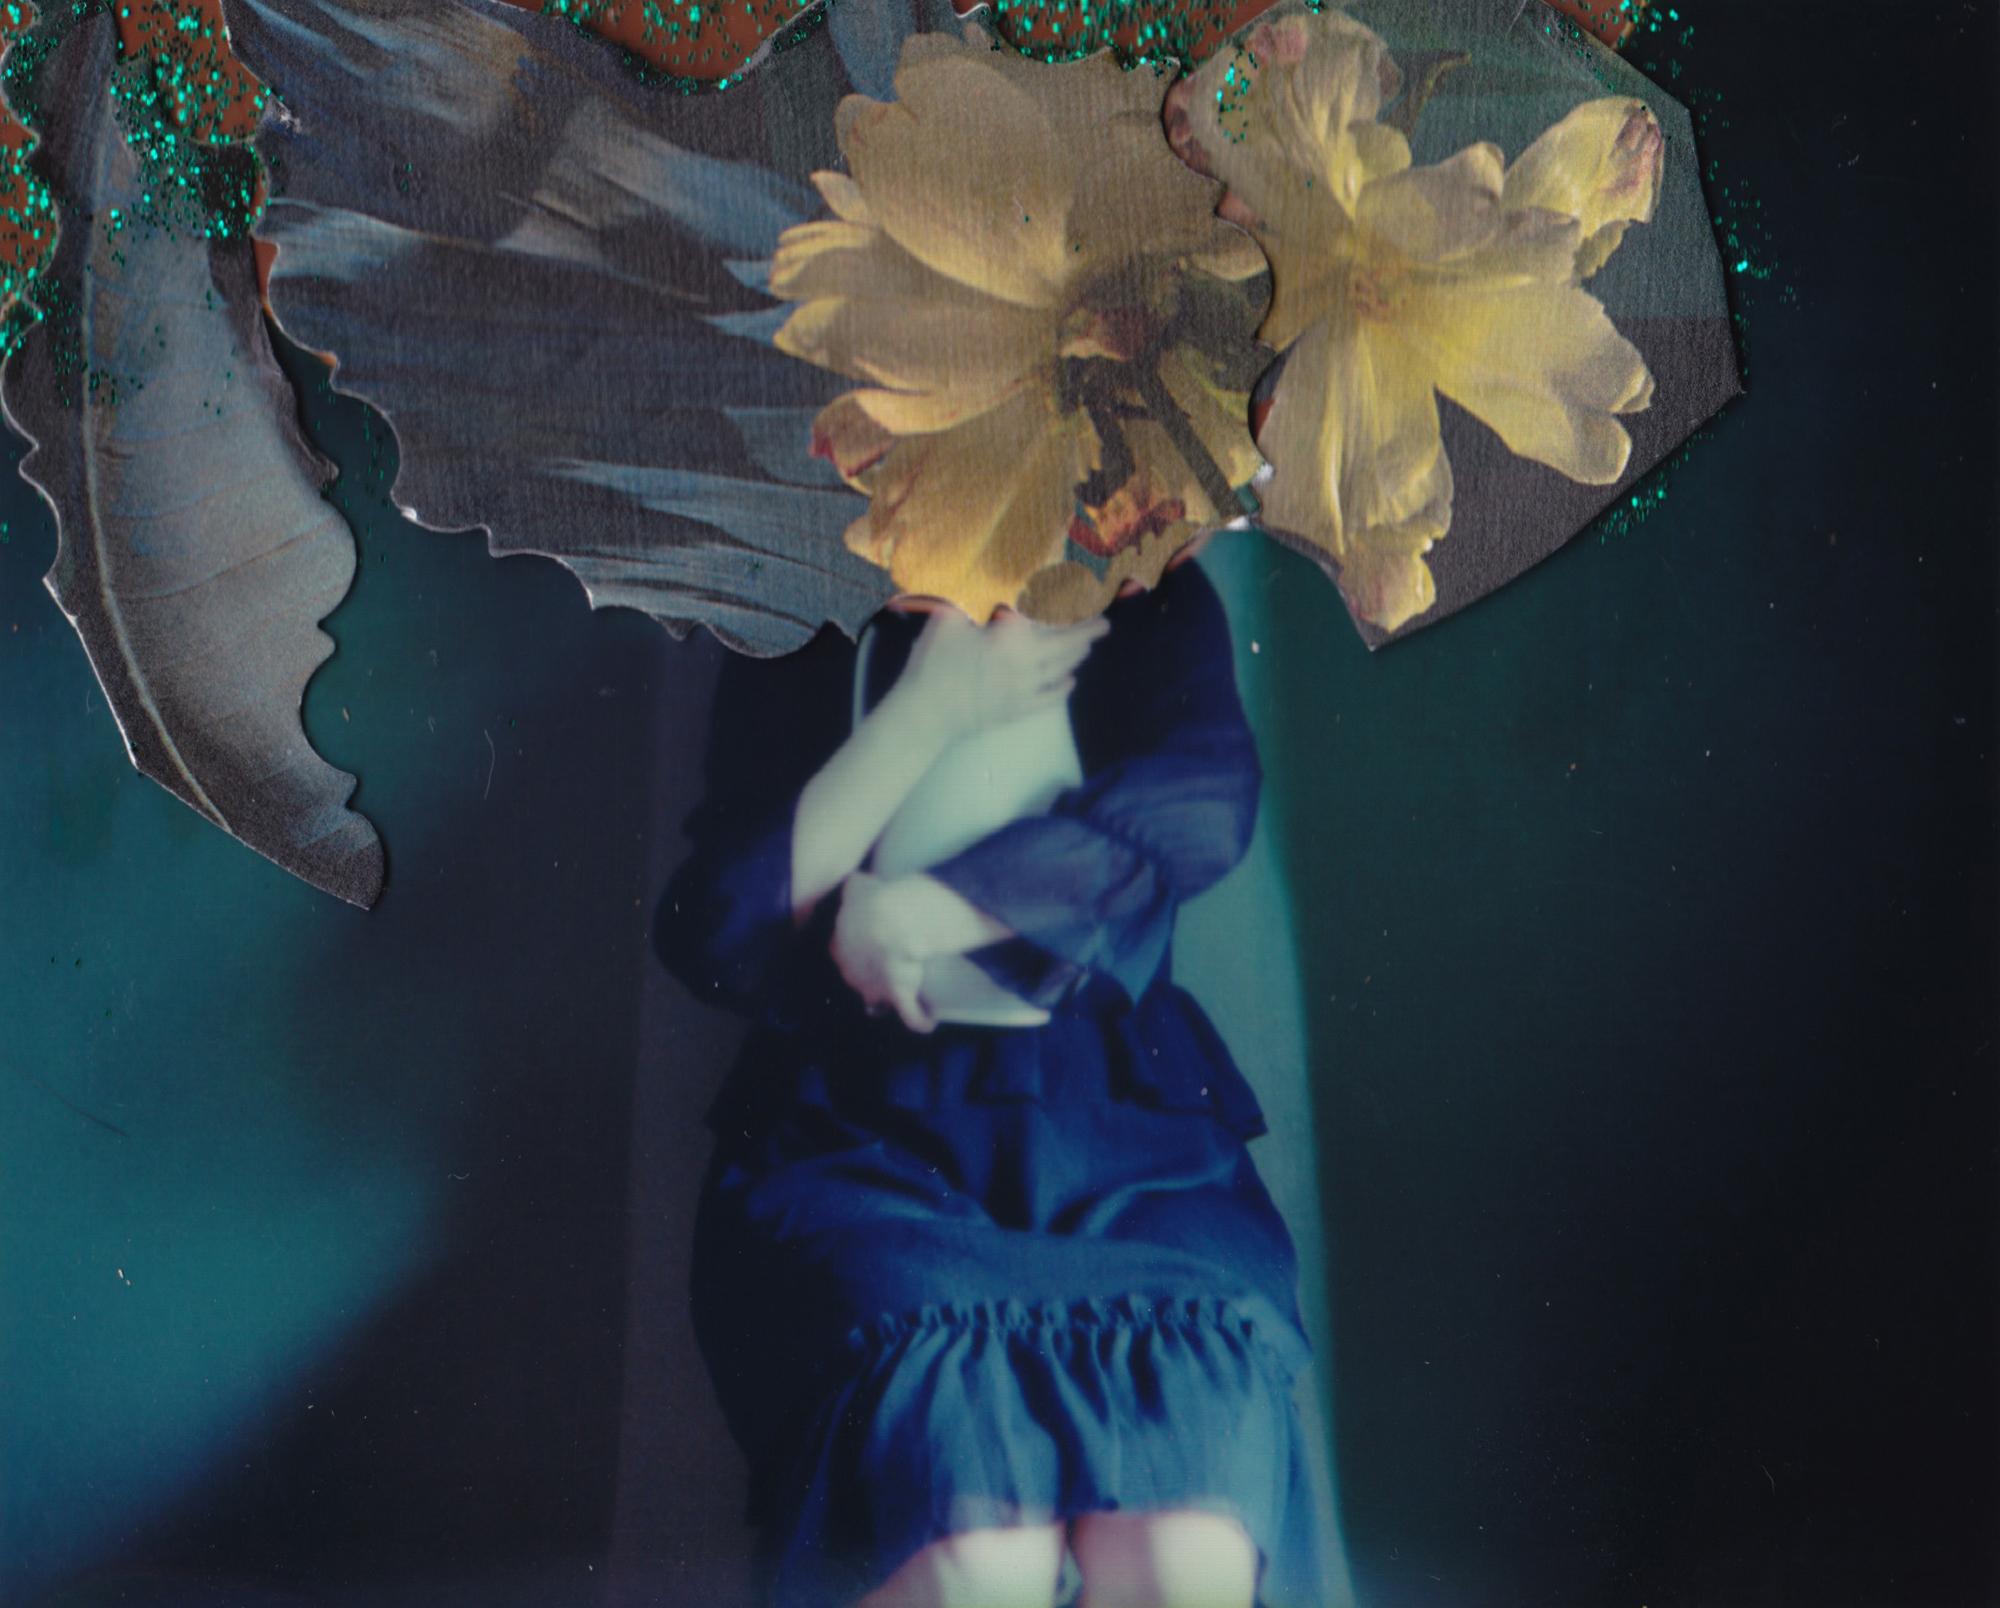 Still-Life Photograph Lisa Toboz - In Bloom - Contemporain, Figuratif, Femme, Polaroid, XXIe Siècle